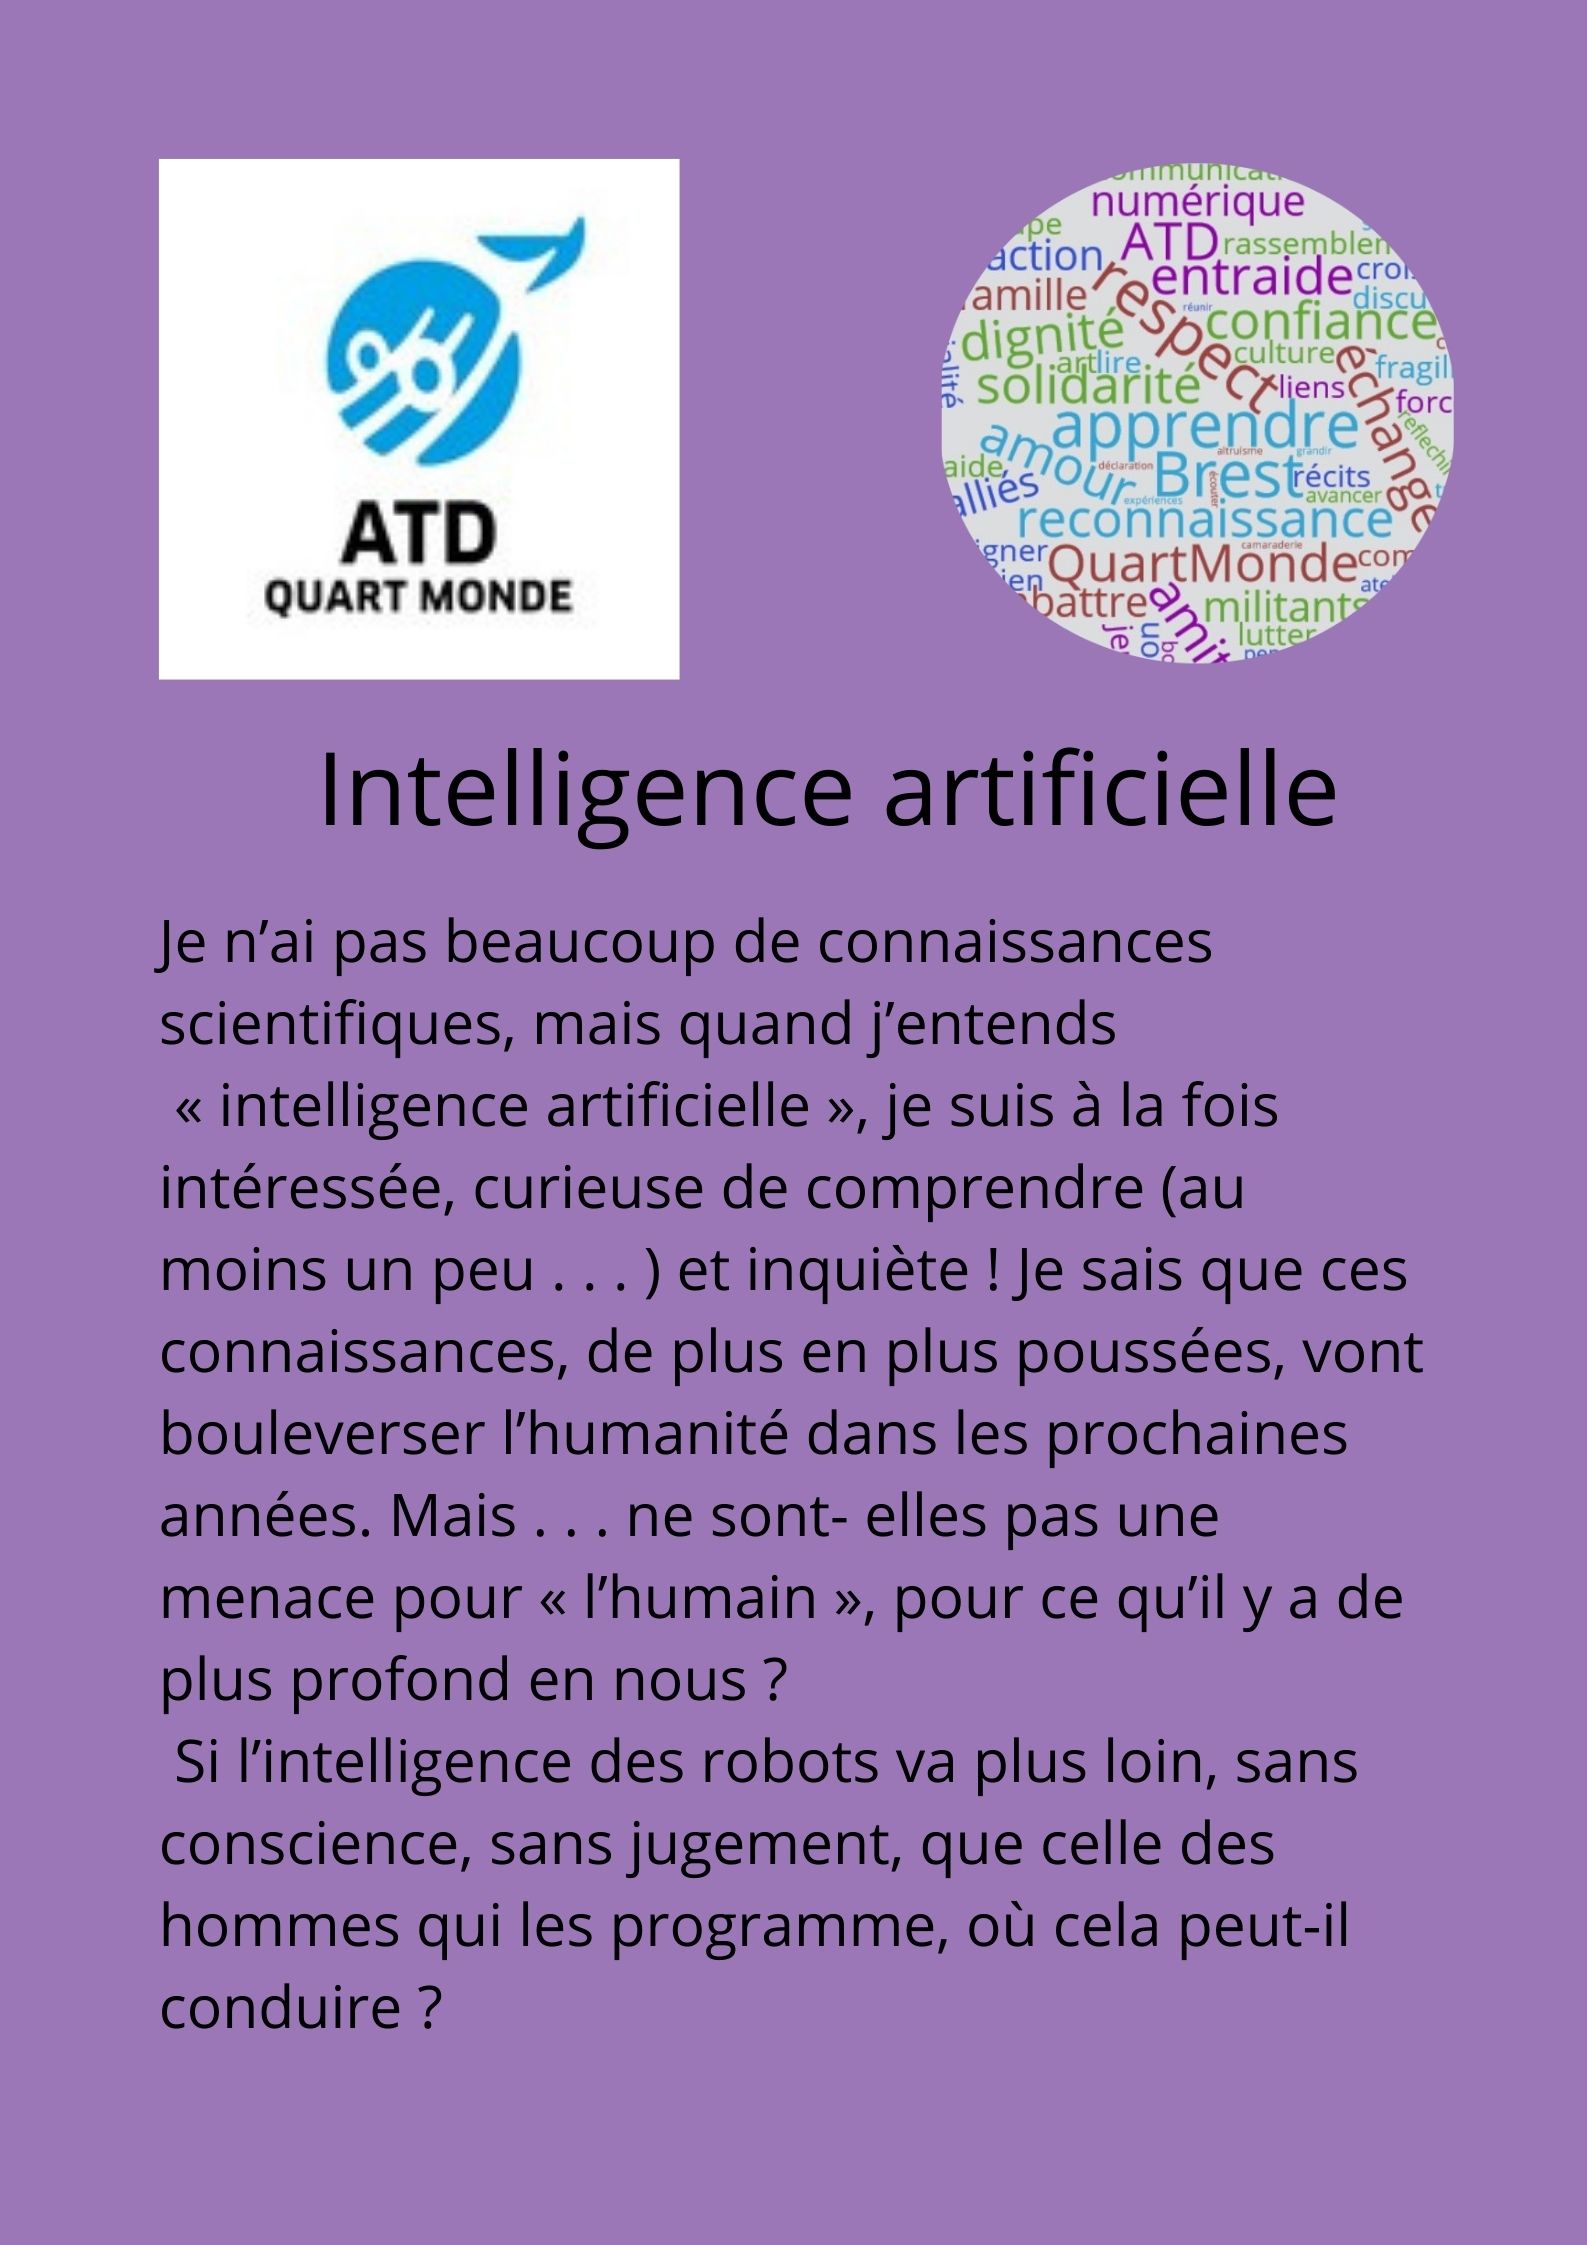 Intelligence artificielle ATD Quart Monde Brest